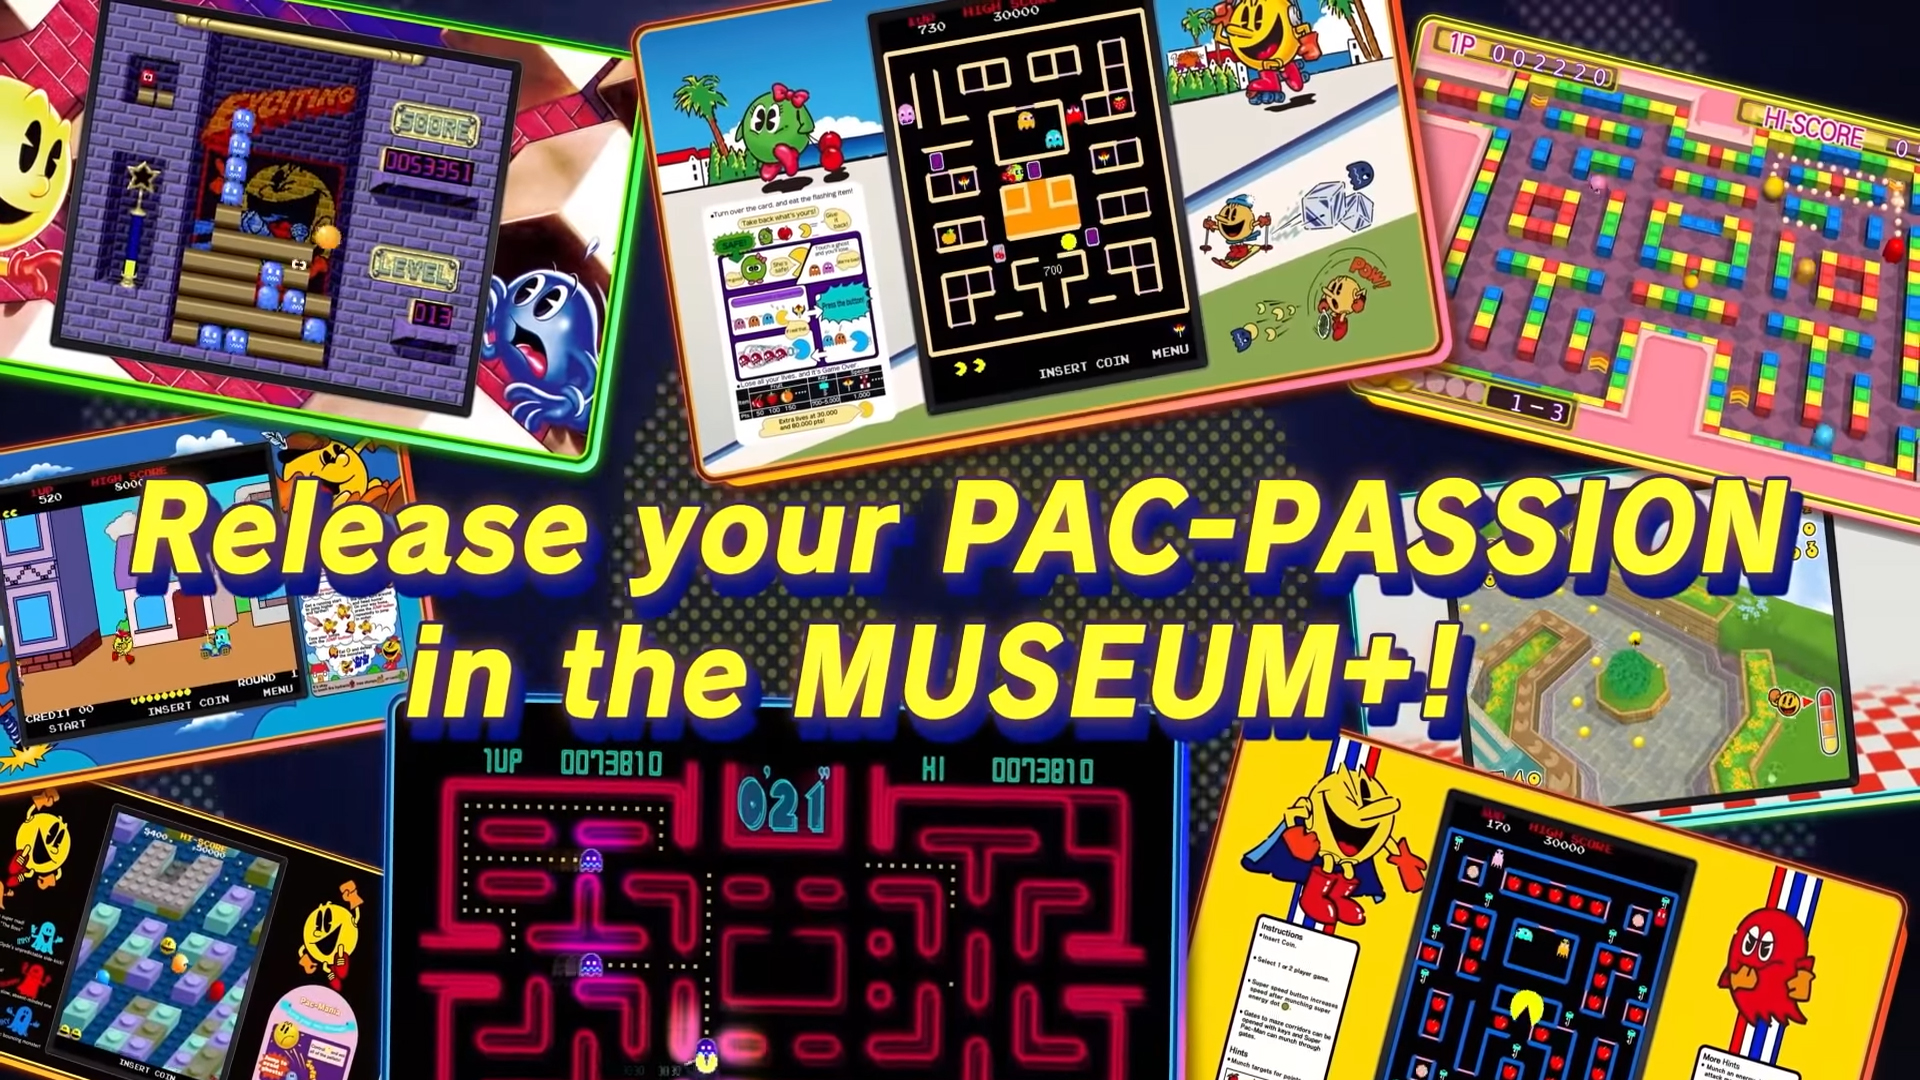 Pac-Man Museum+ - Games